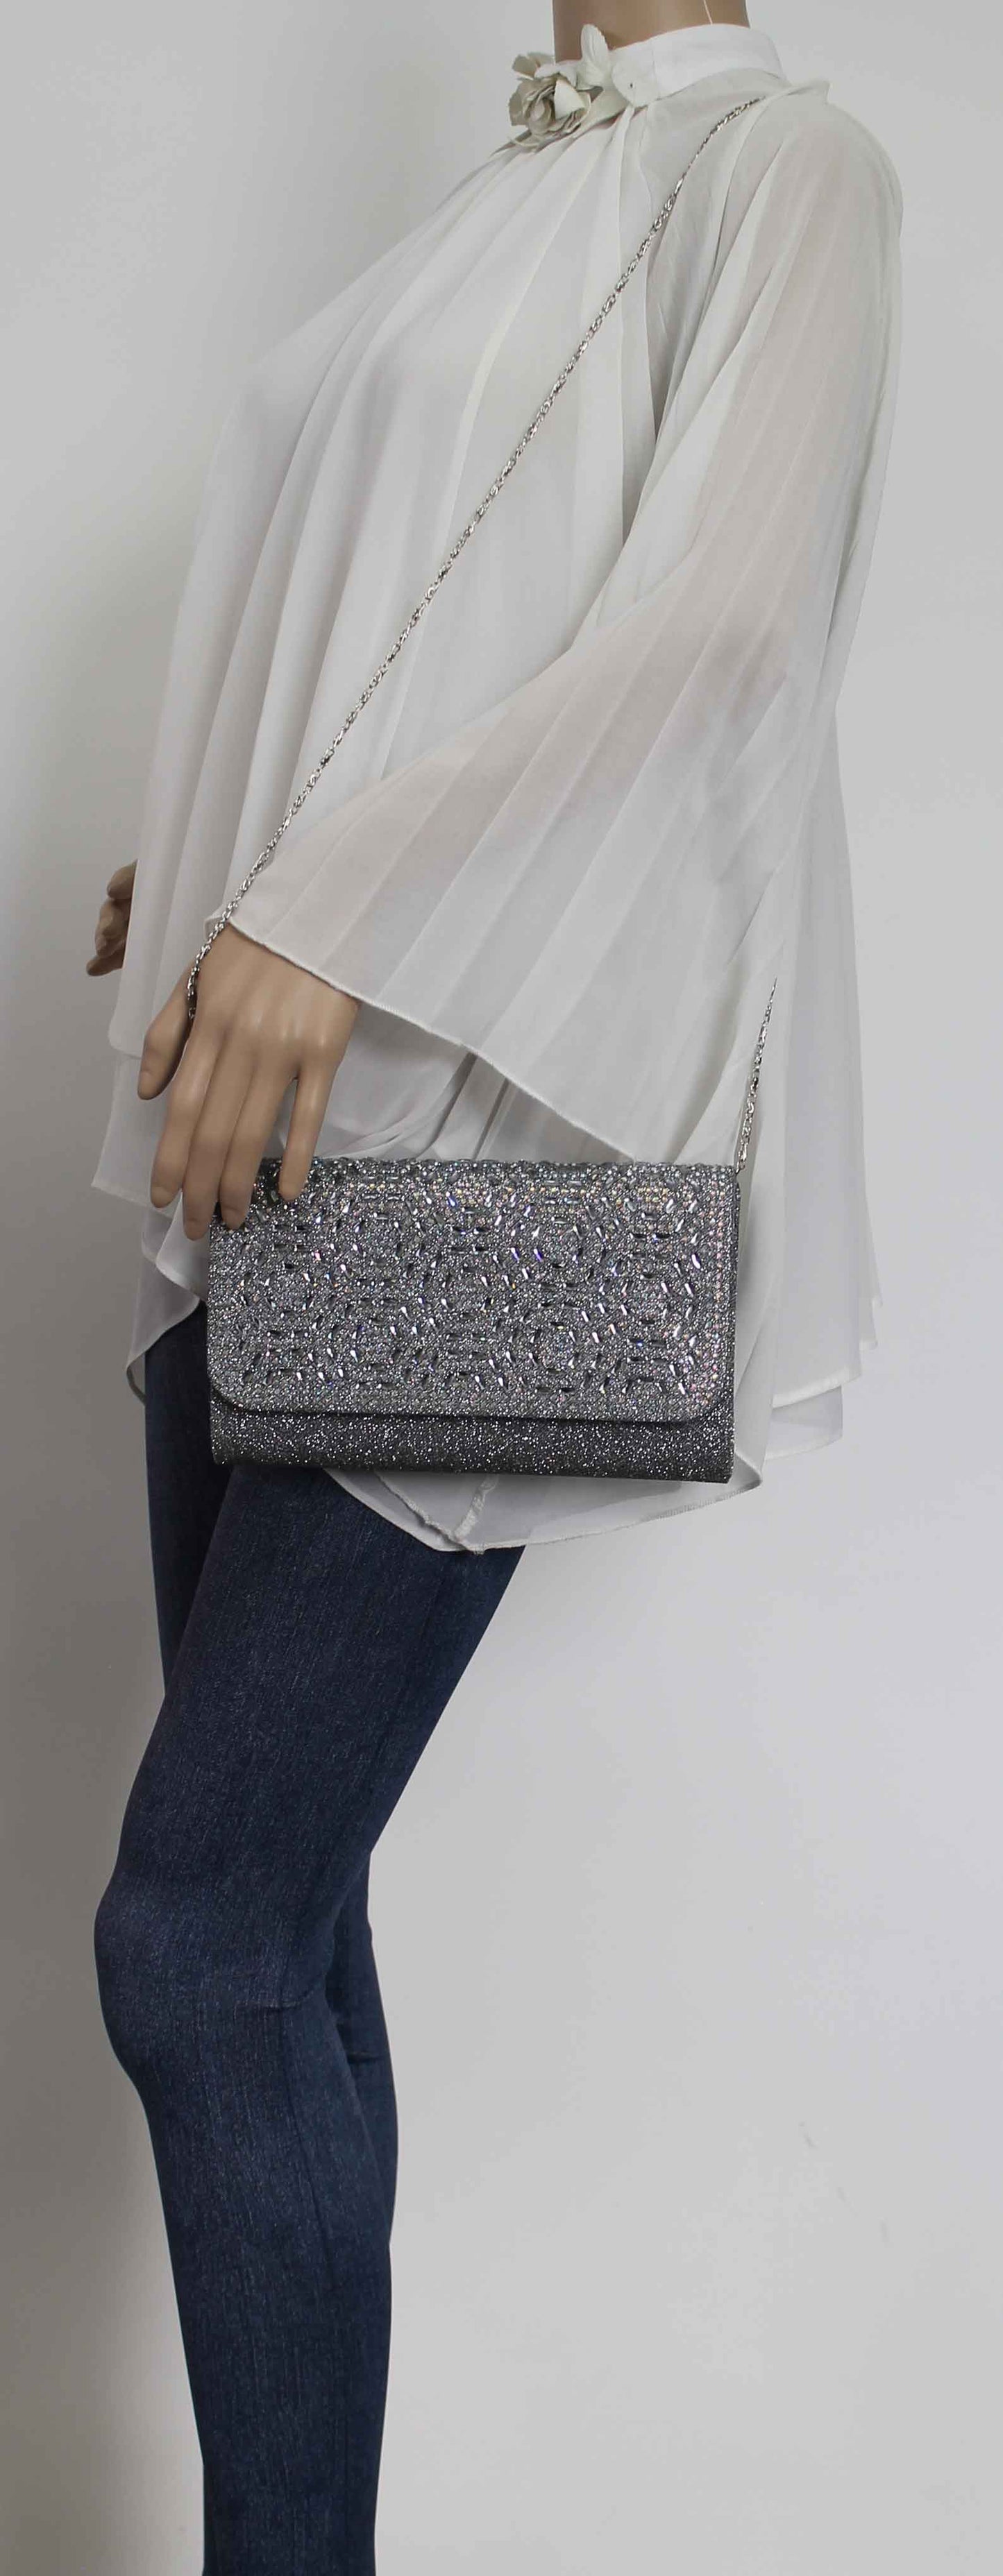 SWANKYSWANS Sophie Diamante Clutch Bag Grey Cute Cheap Clutch Bag For Weddings School and Work